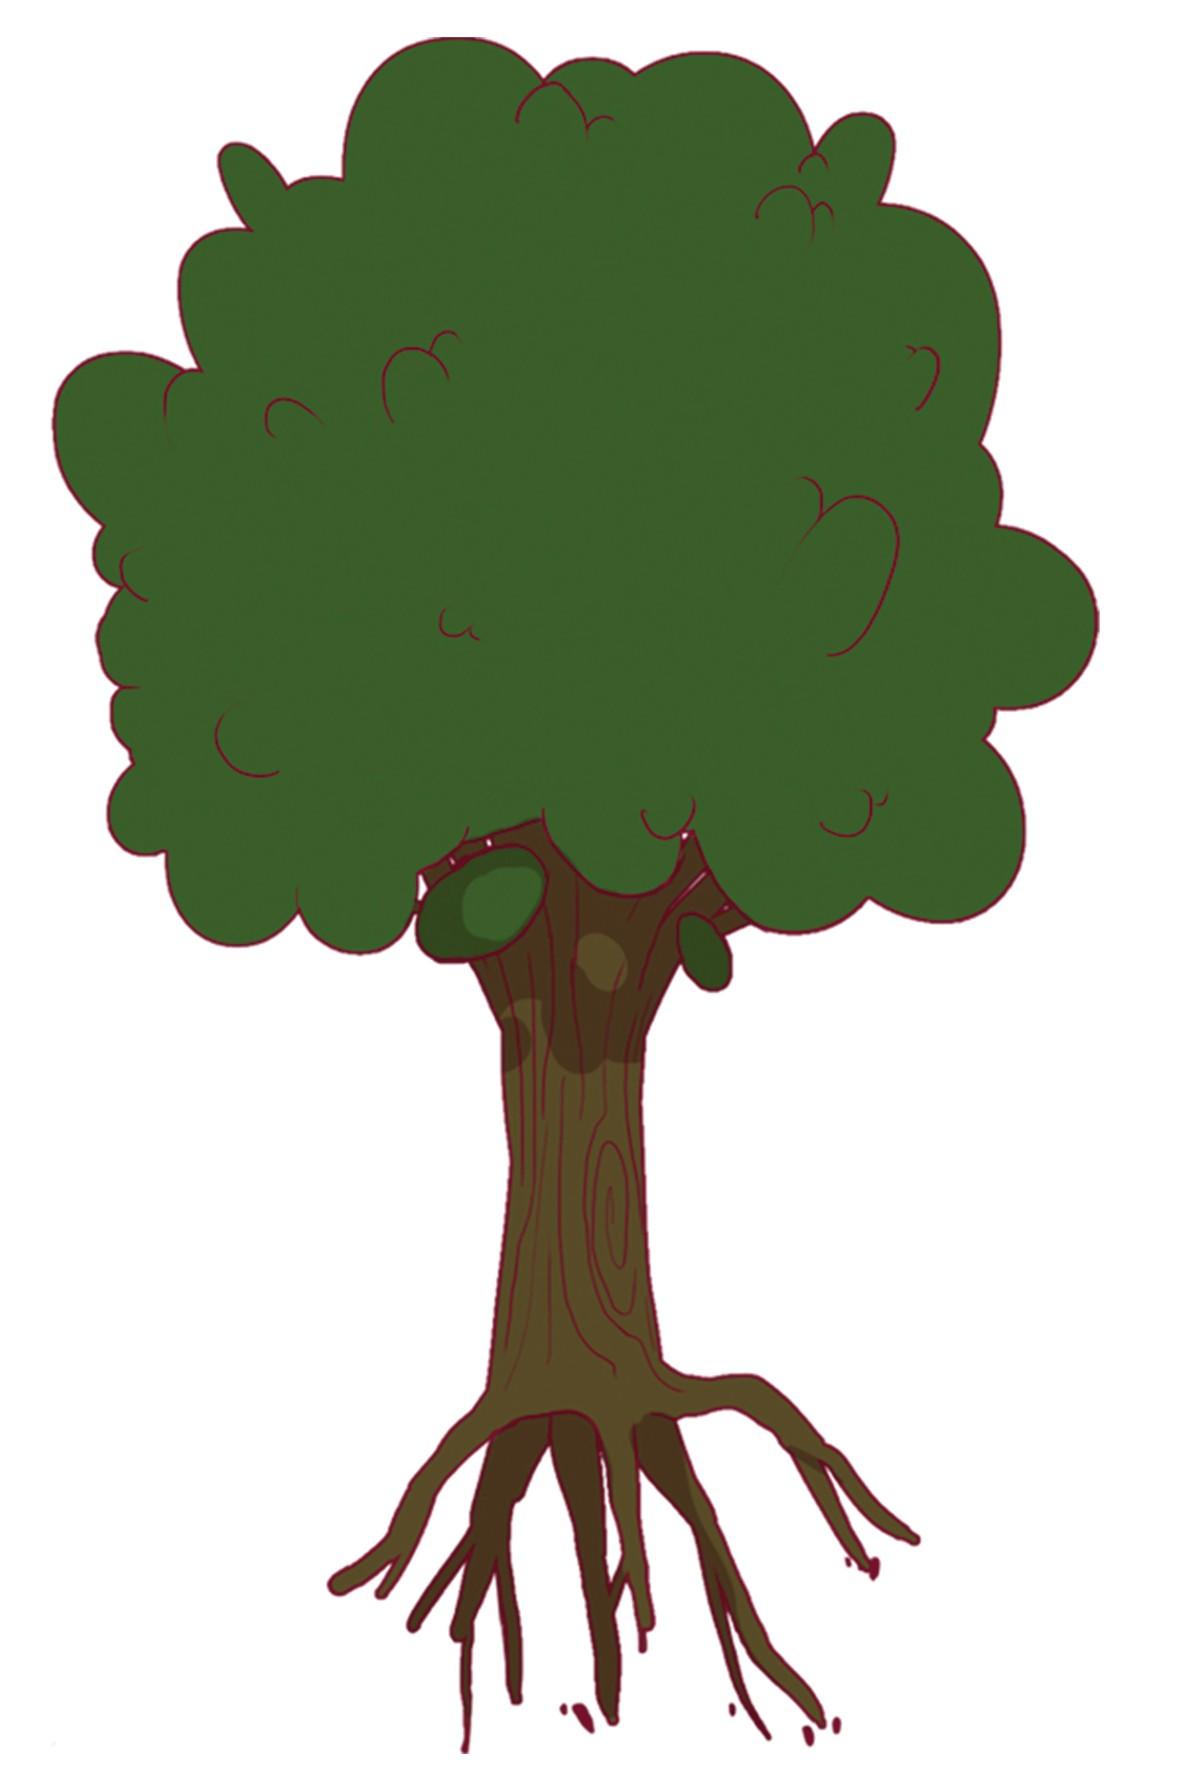 Un arbre avec des racines